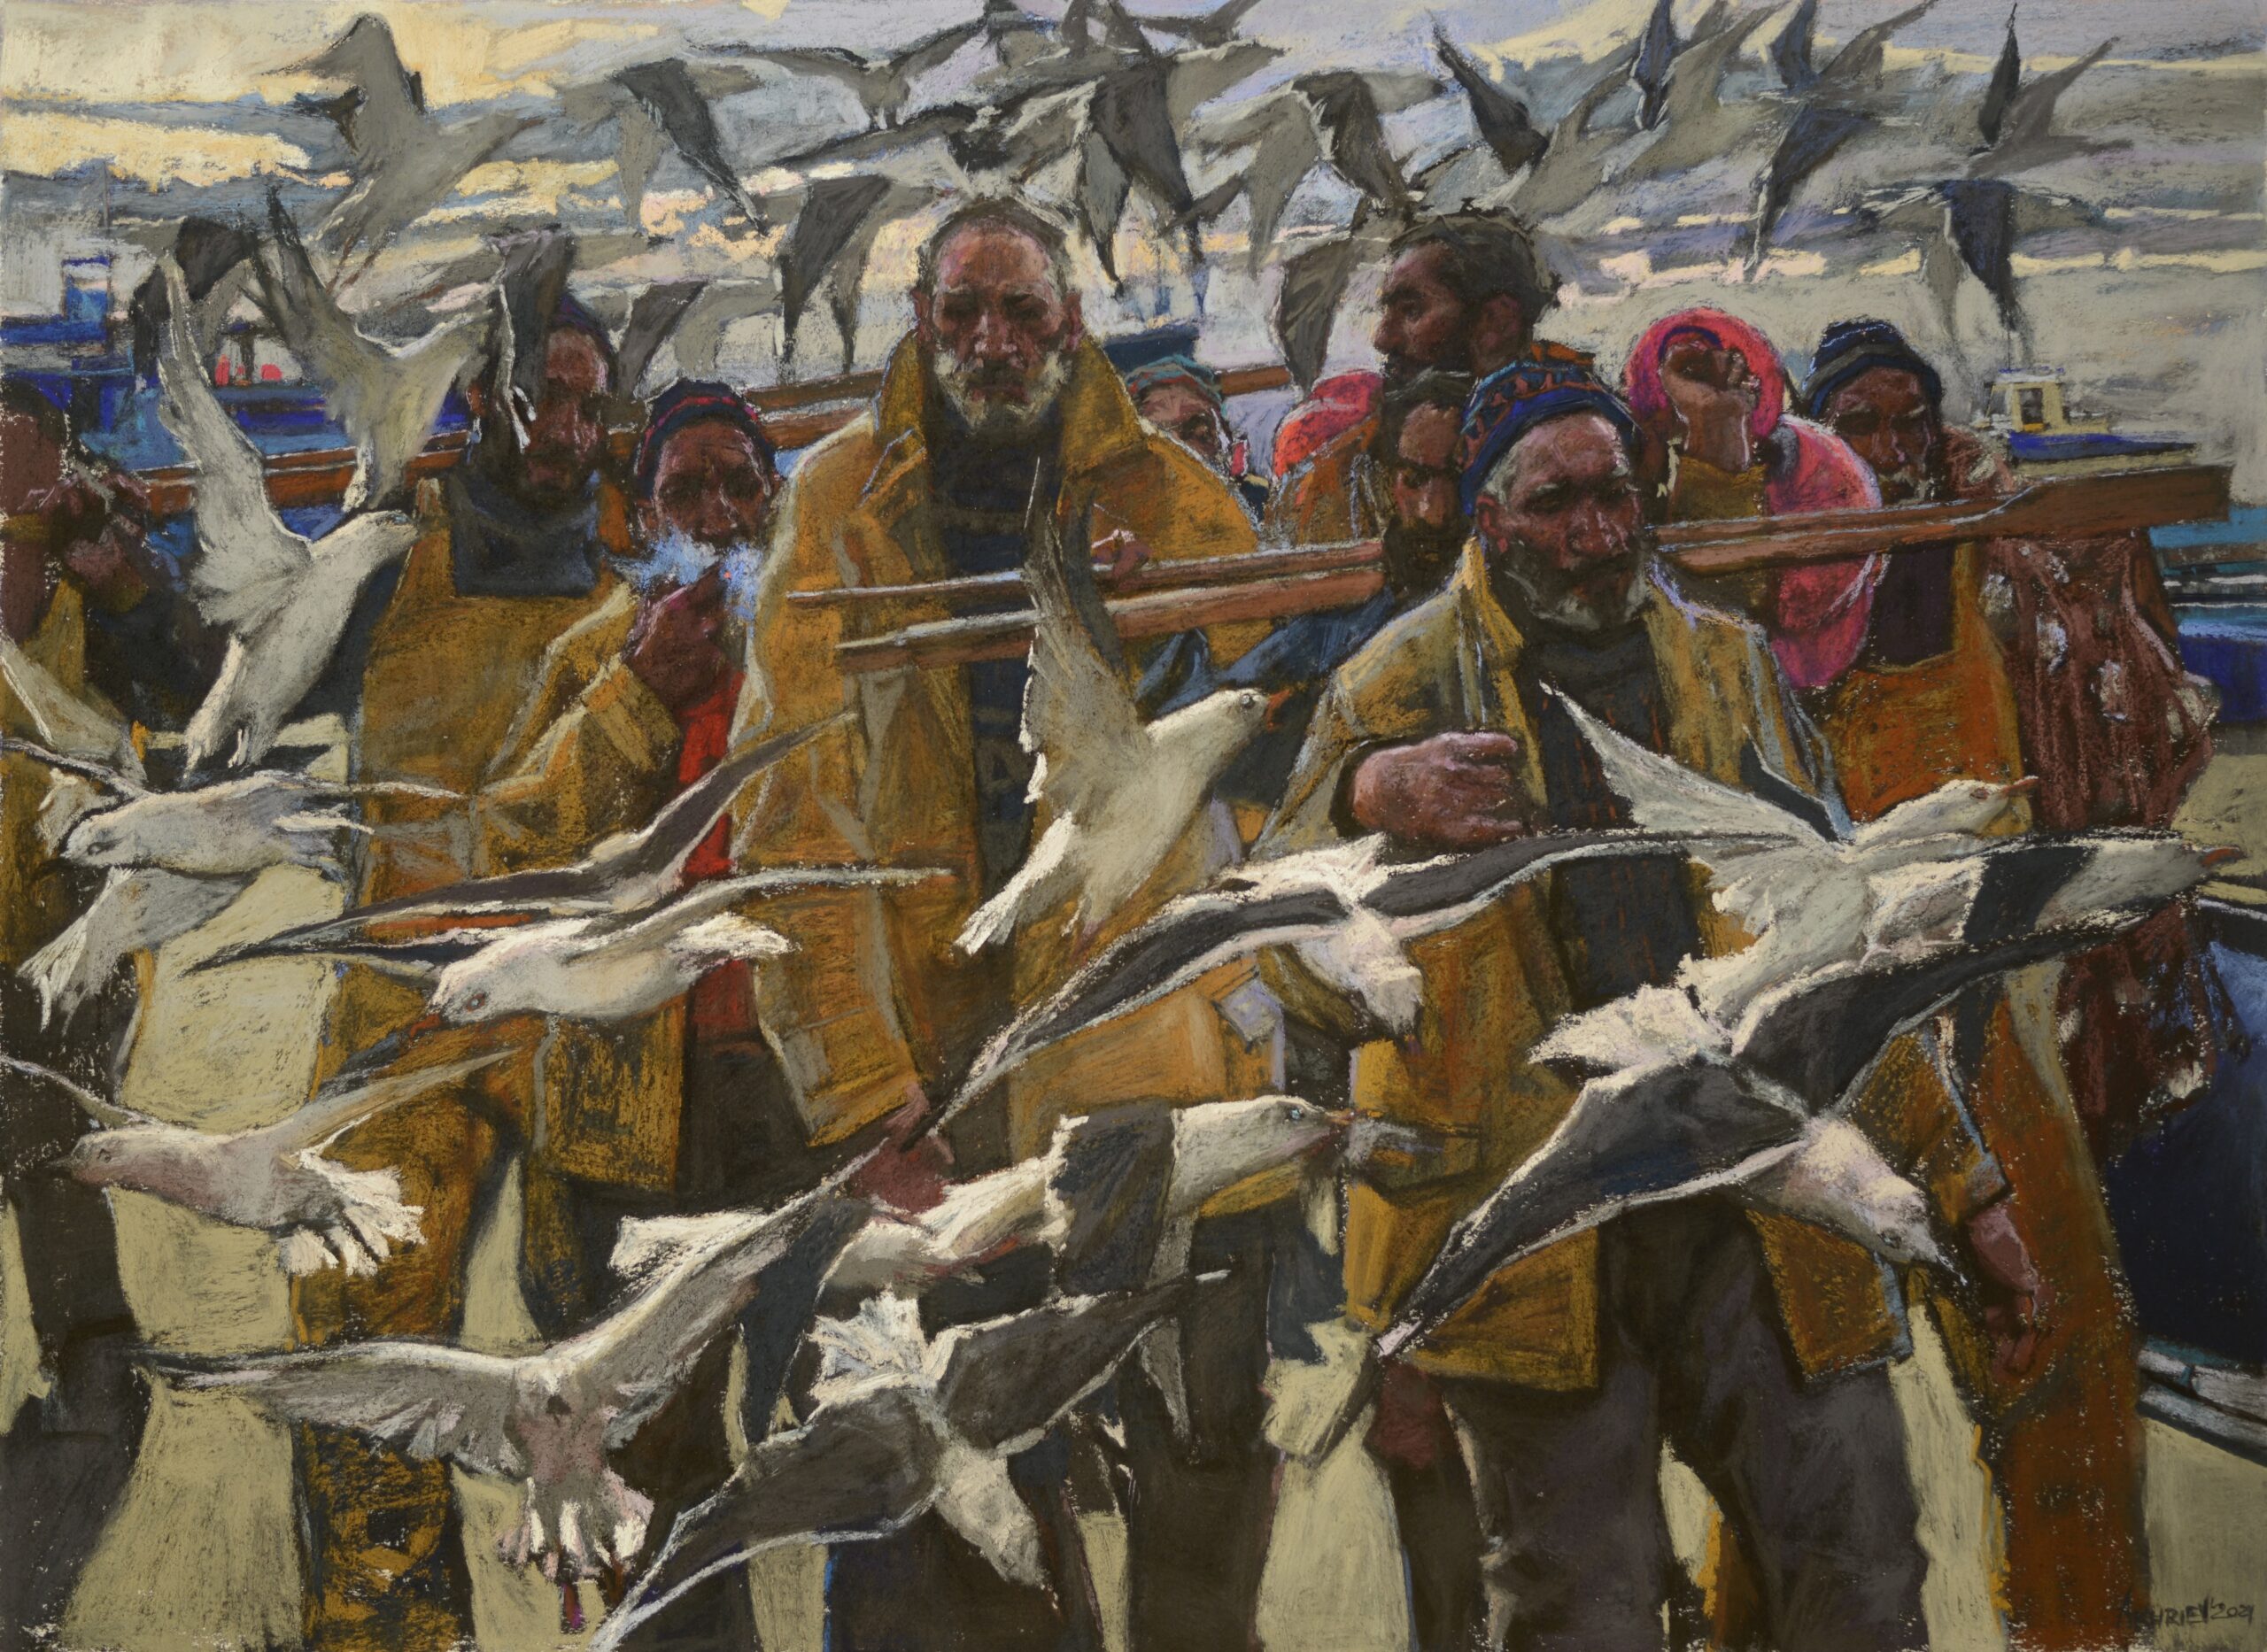 Daud Akhriev, "Life of the Port," pastel painting